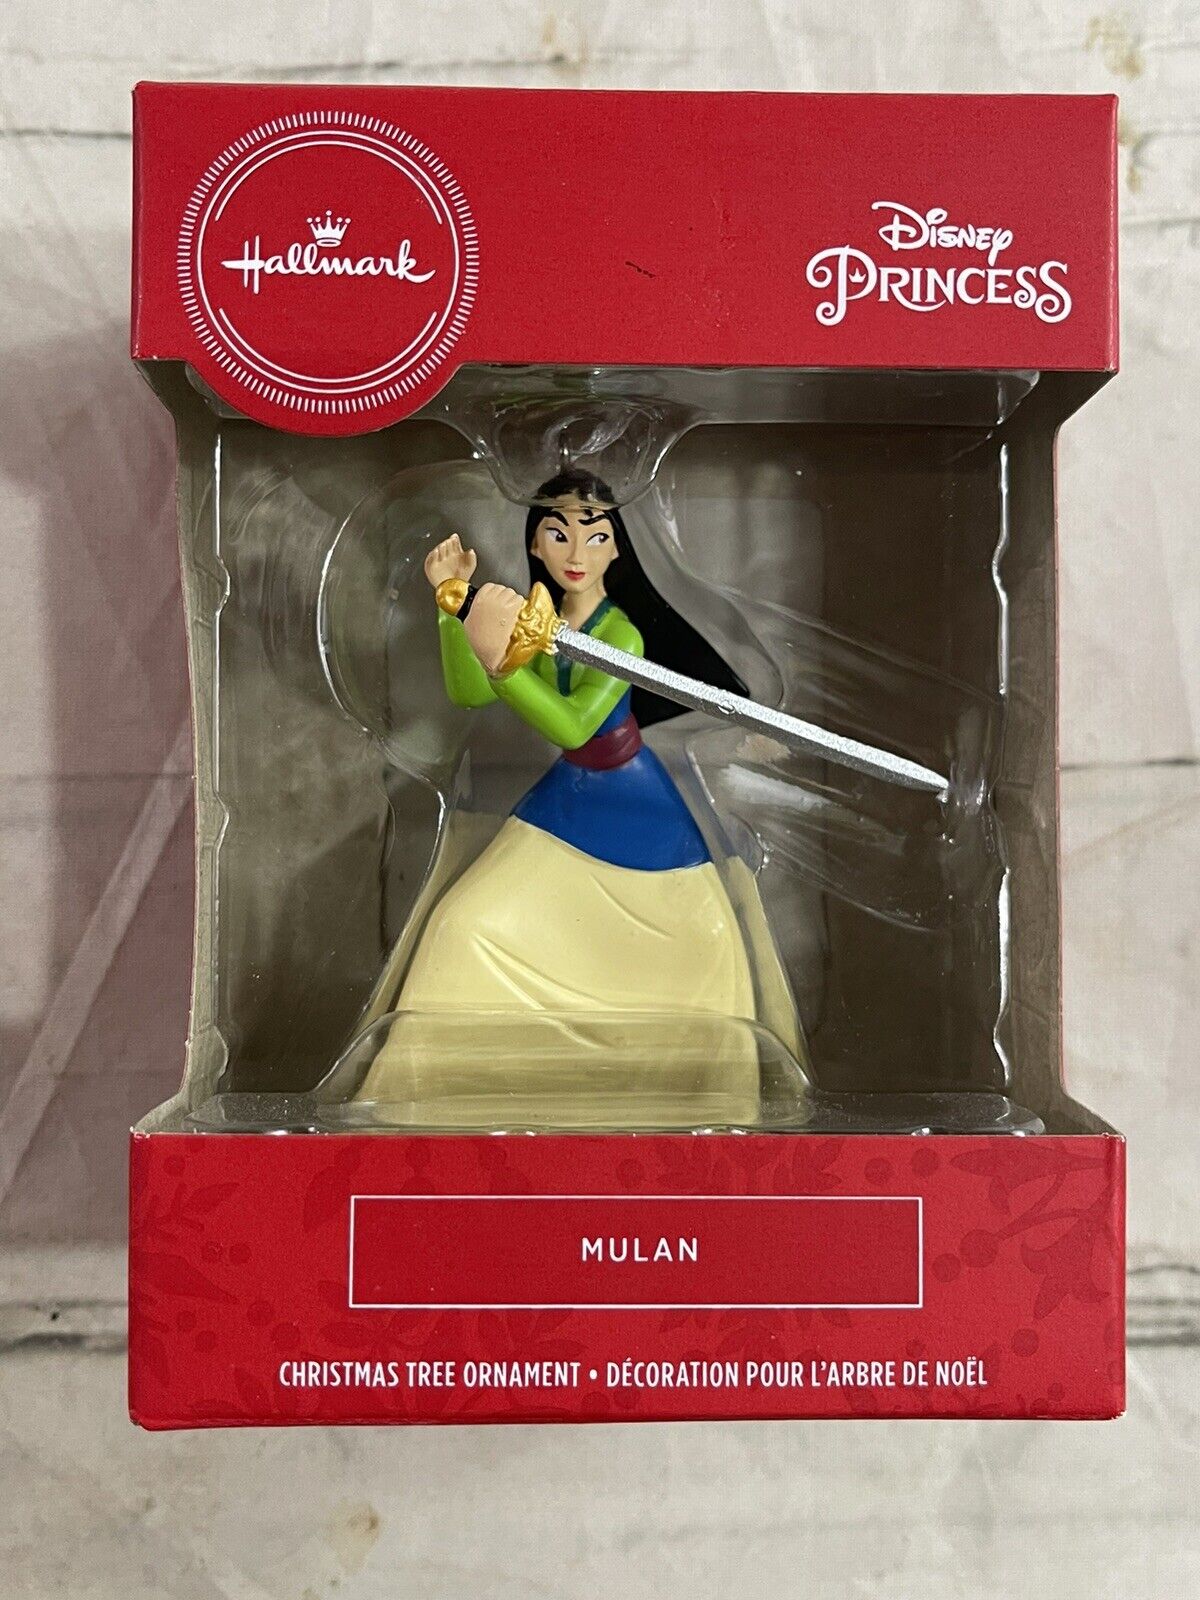 Disney Princess MULAN Red Box 2020 Hallmark Ornament NEW